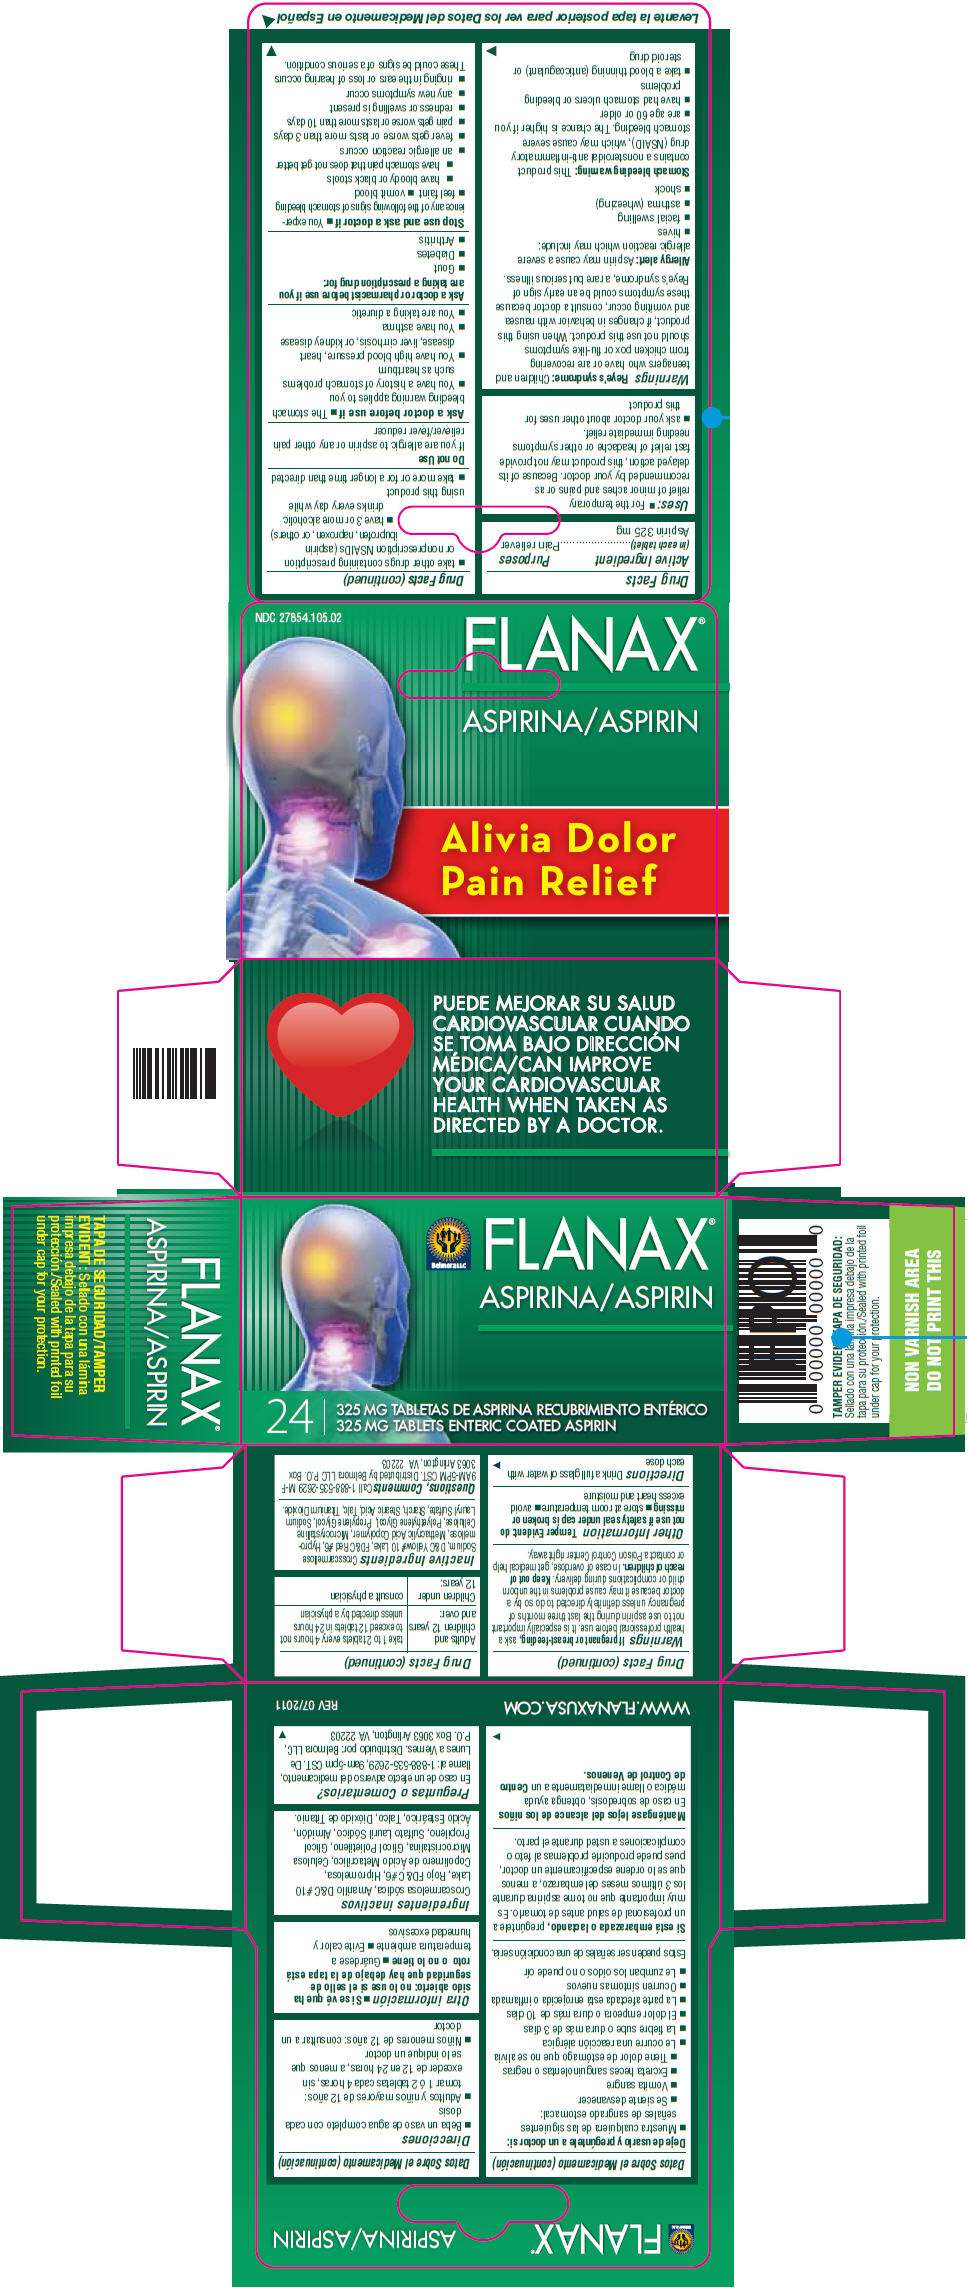 Flanax Aspirin Pain Reliever